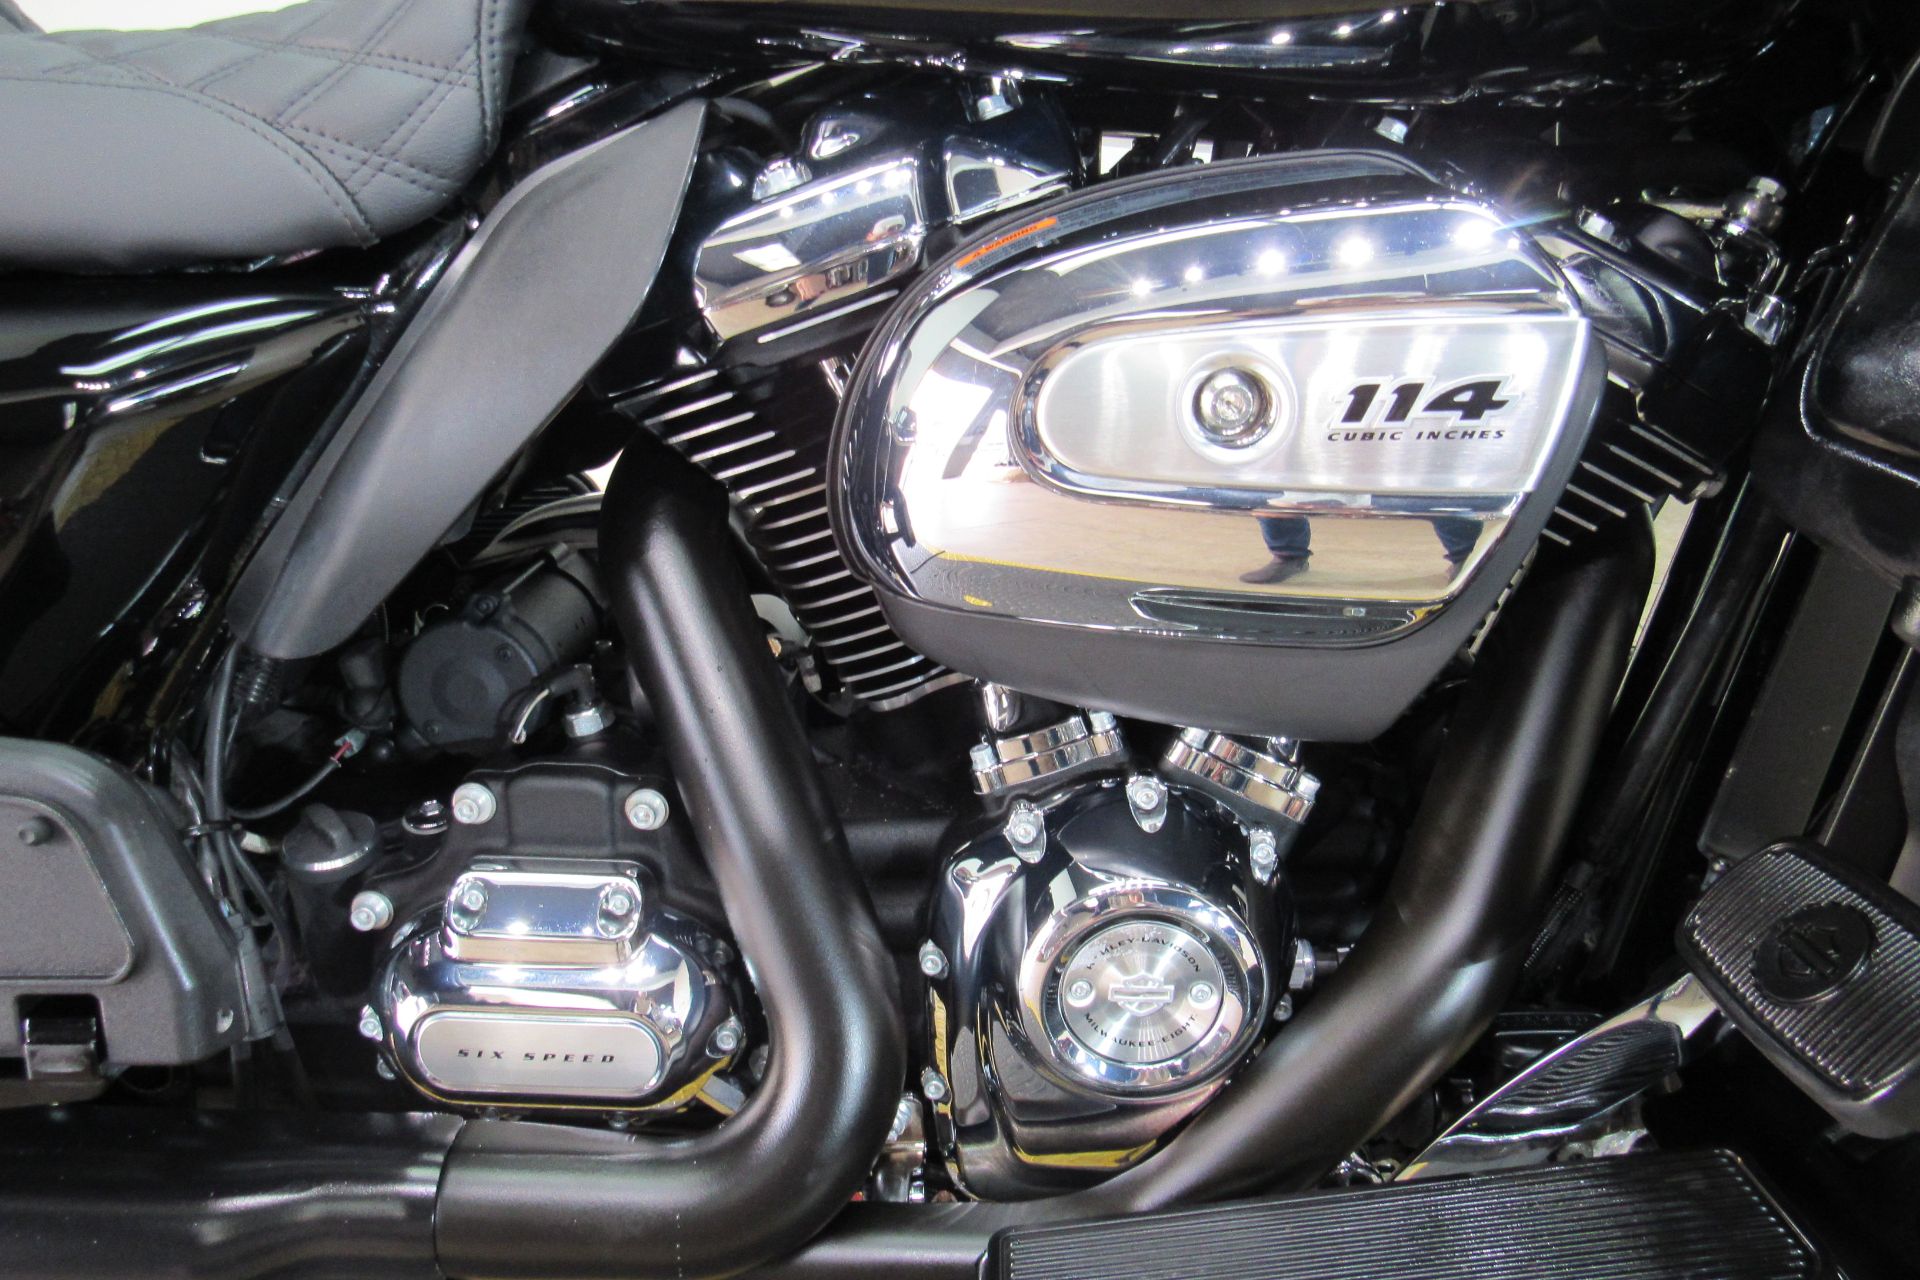 2021 Harley-Davidson Road Glide® Limited in Temecula, California - Photo 5